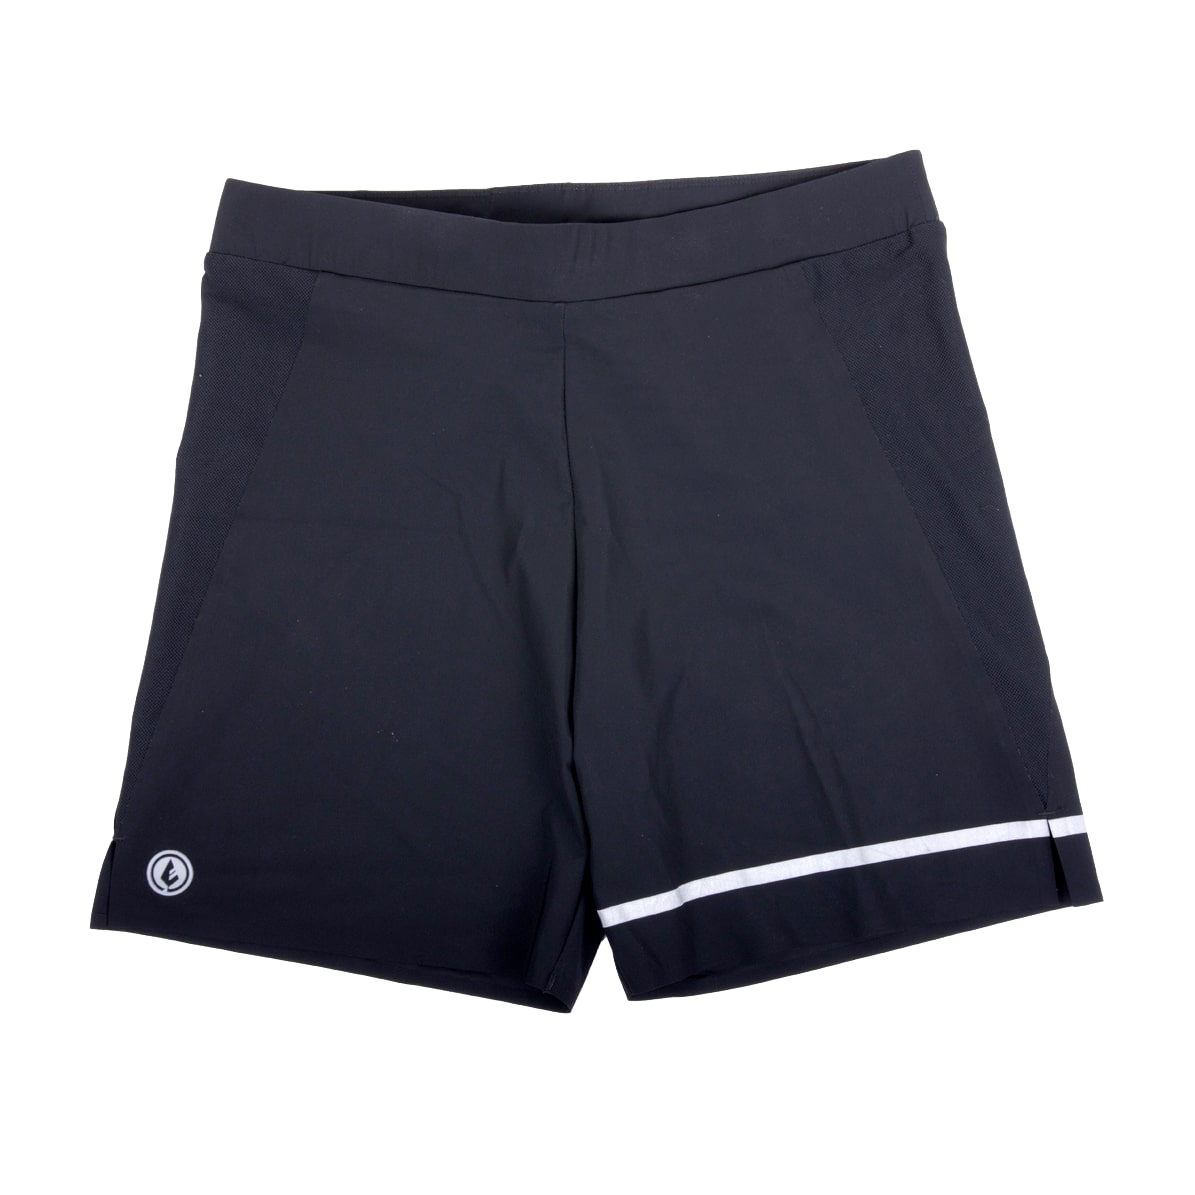 Nosc Wild Short - Running shorts - Men's